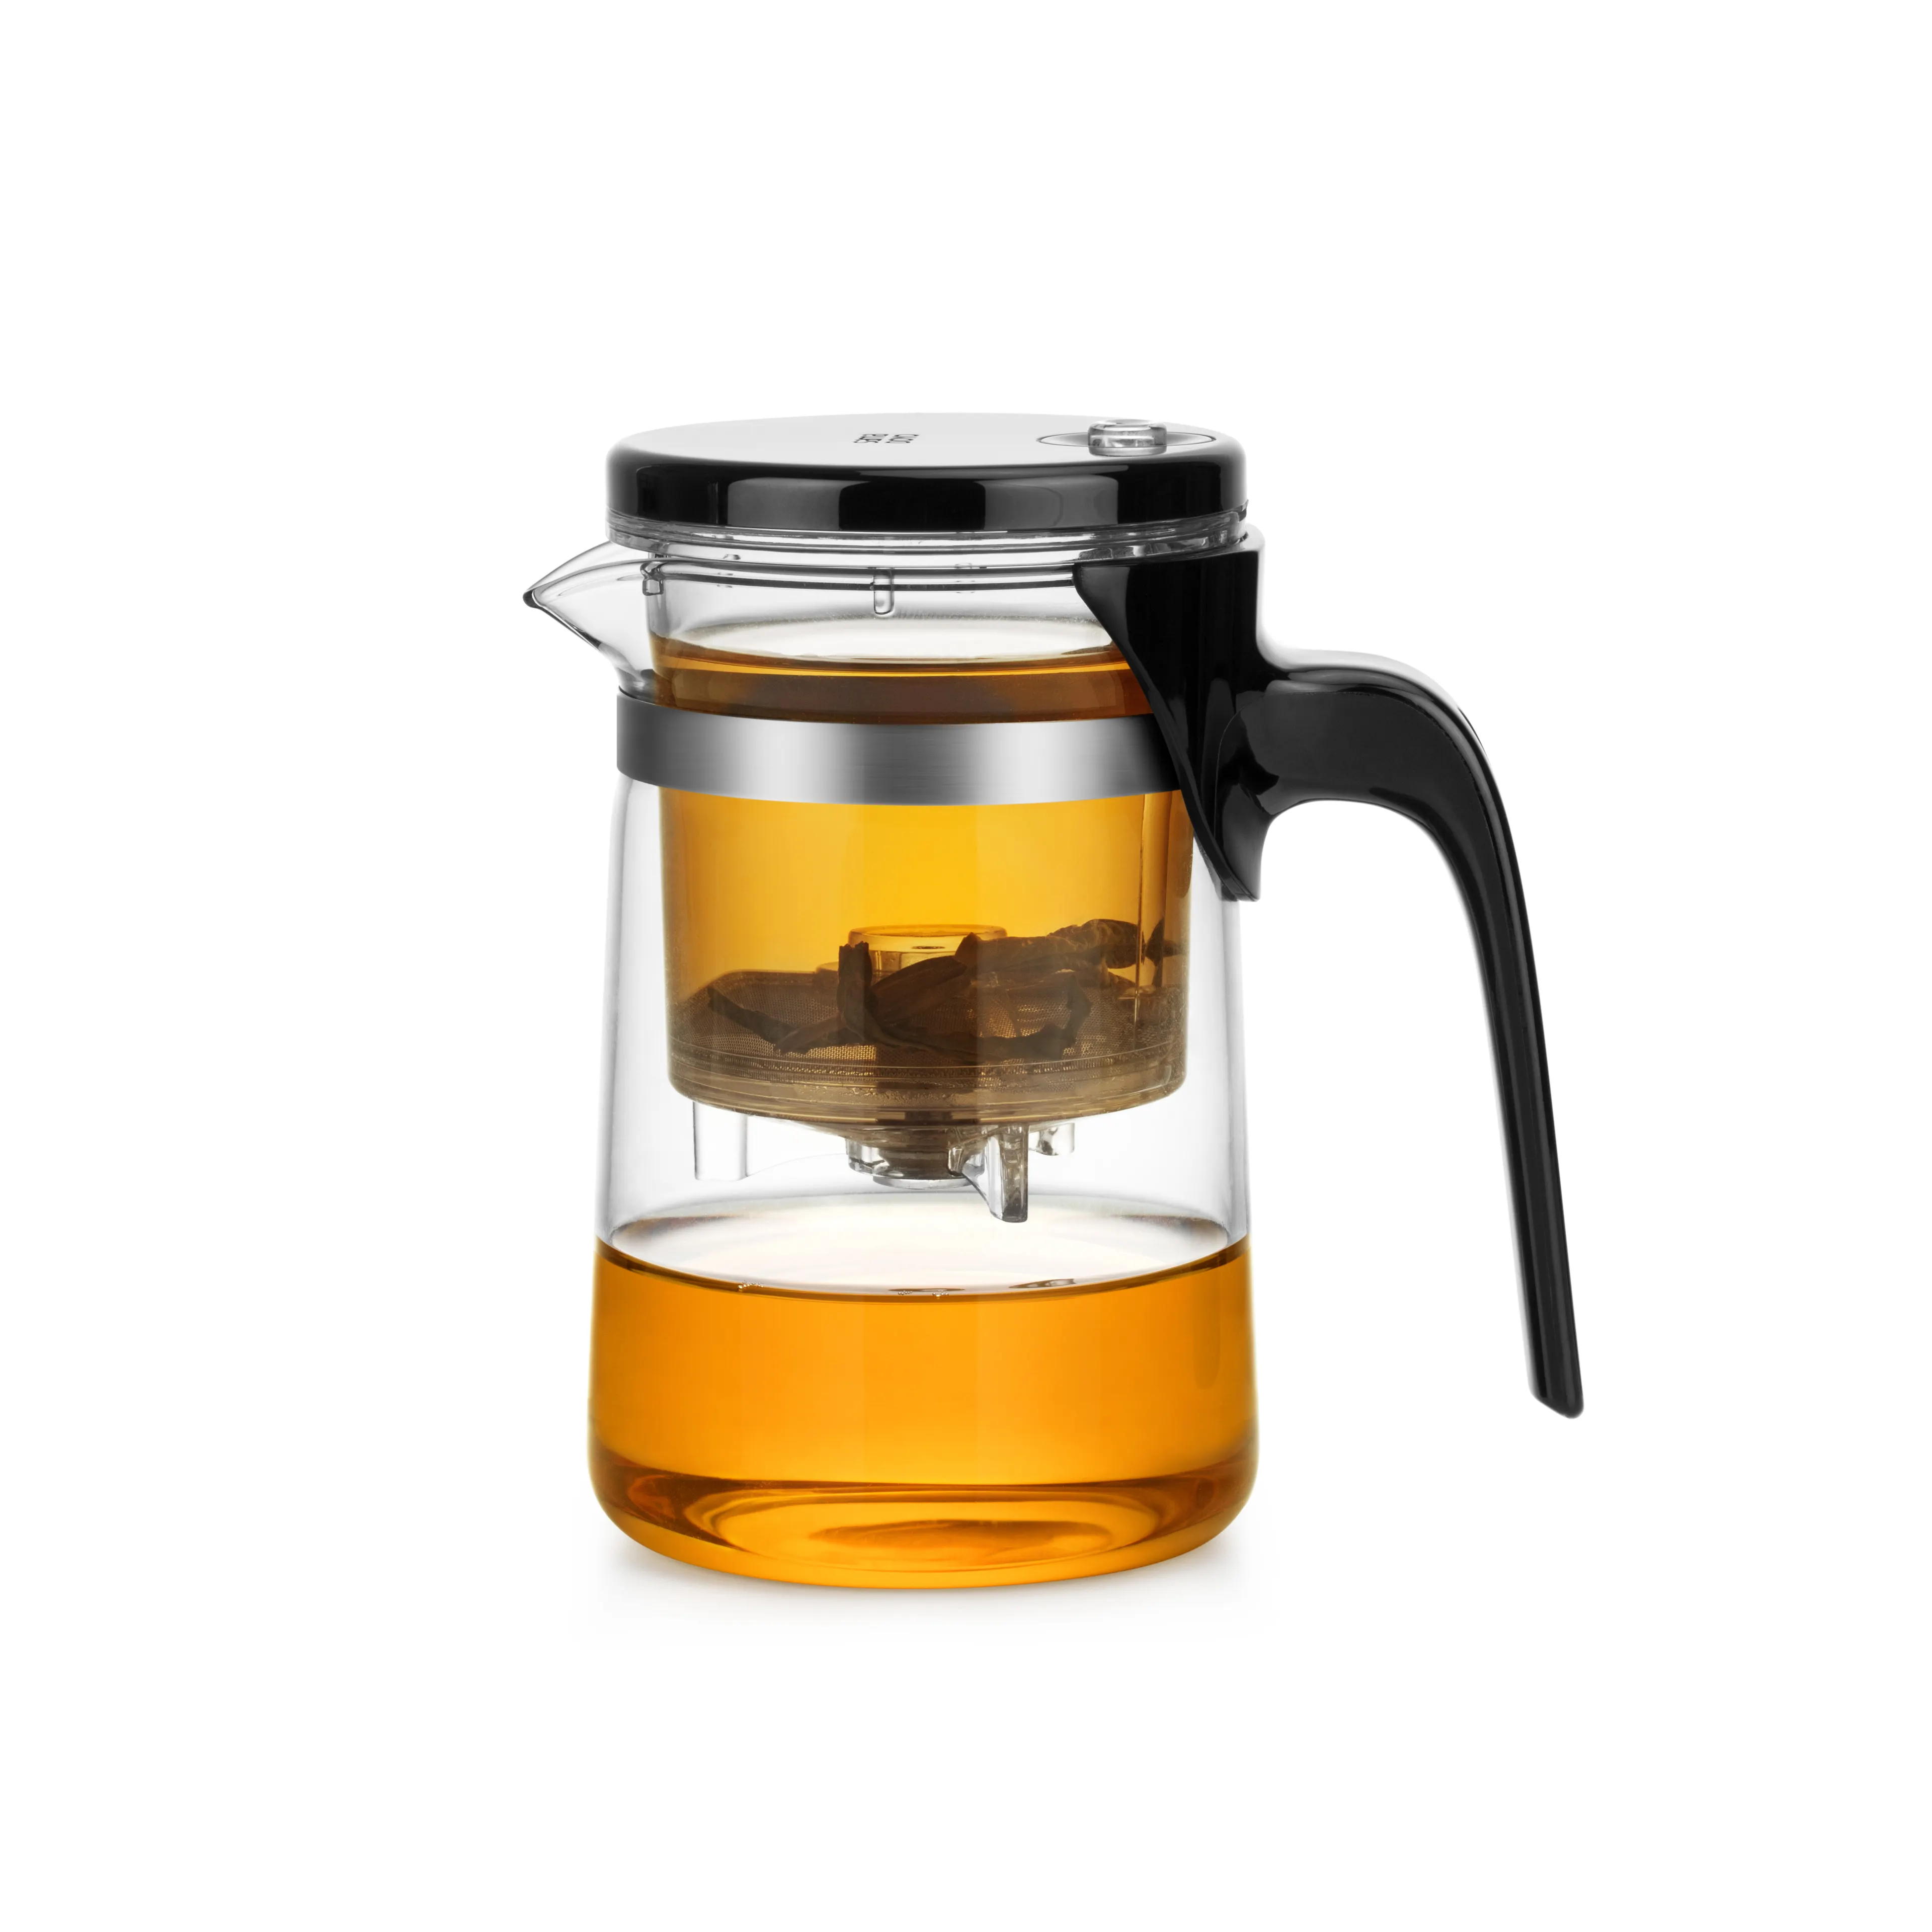 SAMADOYO Heat耐Glass Tea Pots/Teapots With Infuser In Hot Sale